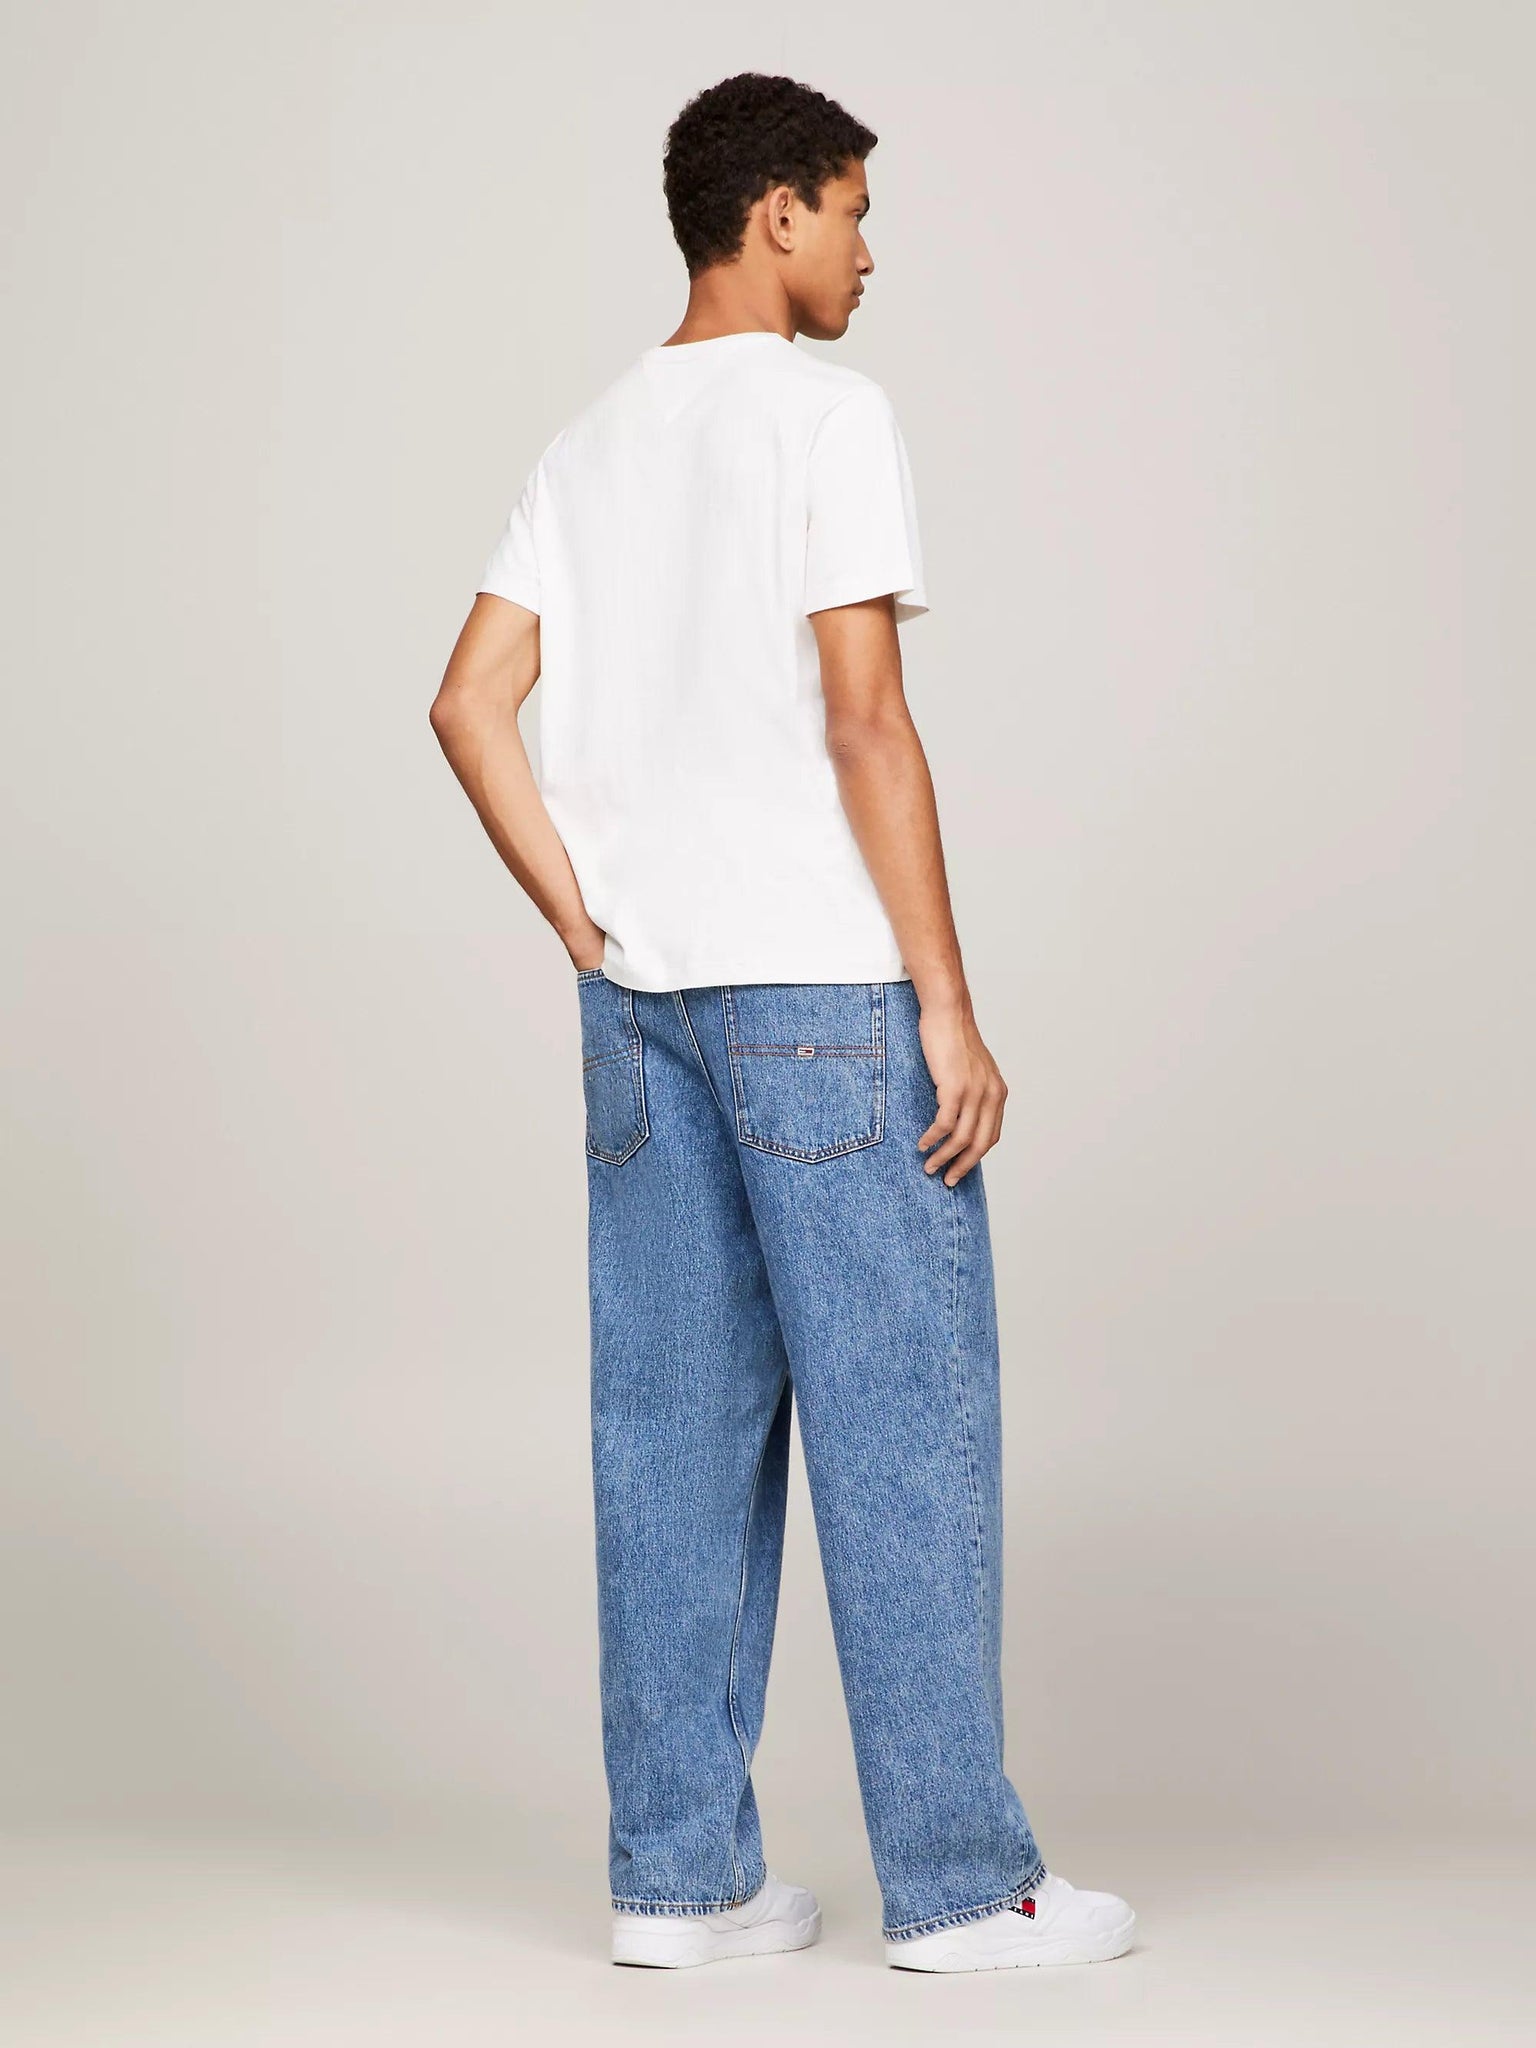 Camiseta Tommy Jeans Classics de Algodón Orgánica Blanca - ECRU